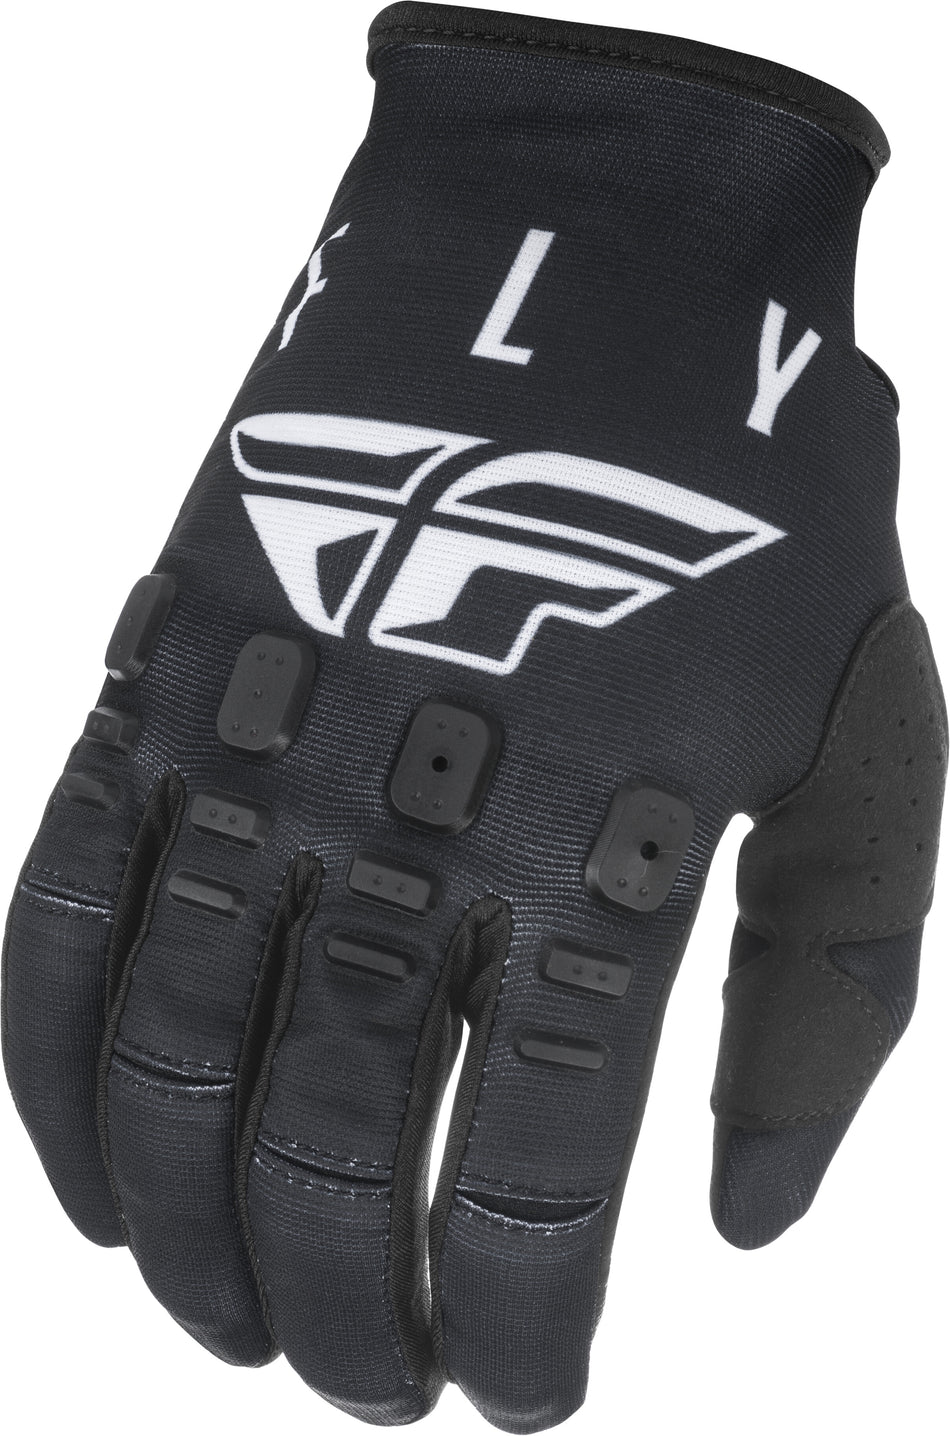 FLY RACING Kinetic K121 Gloves Black/White Sz 09 374-41009